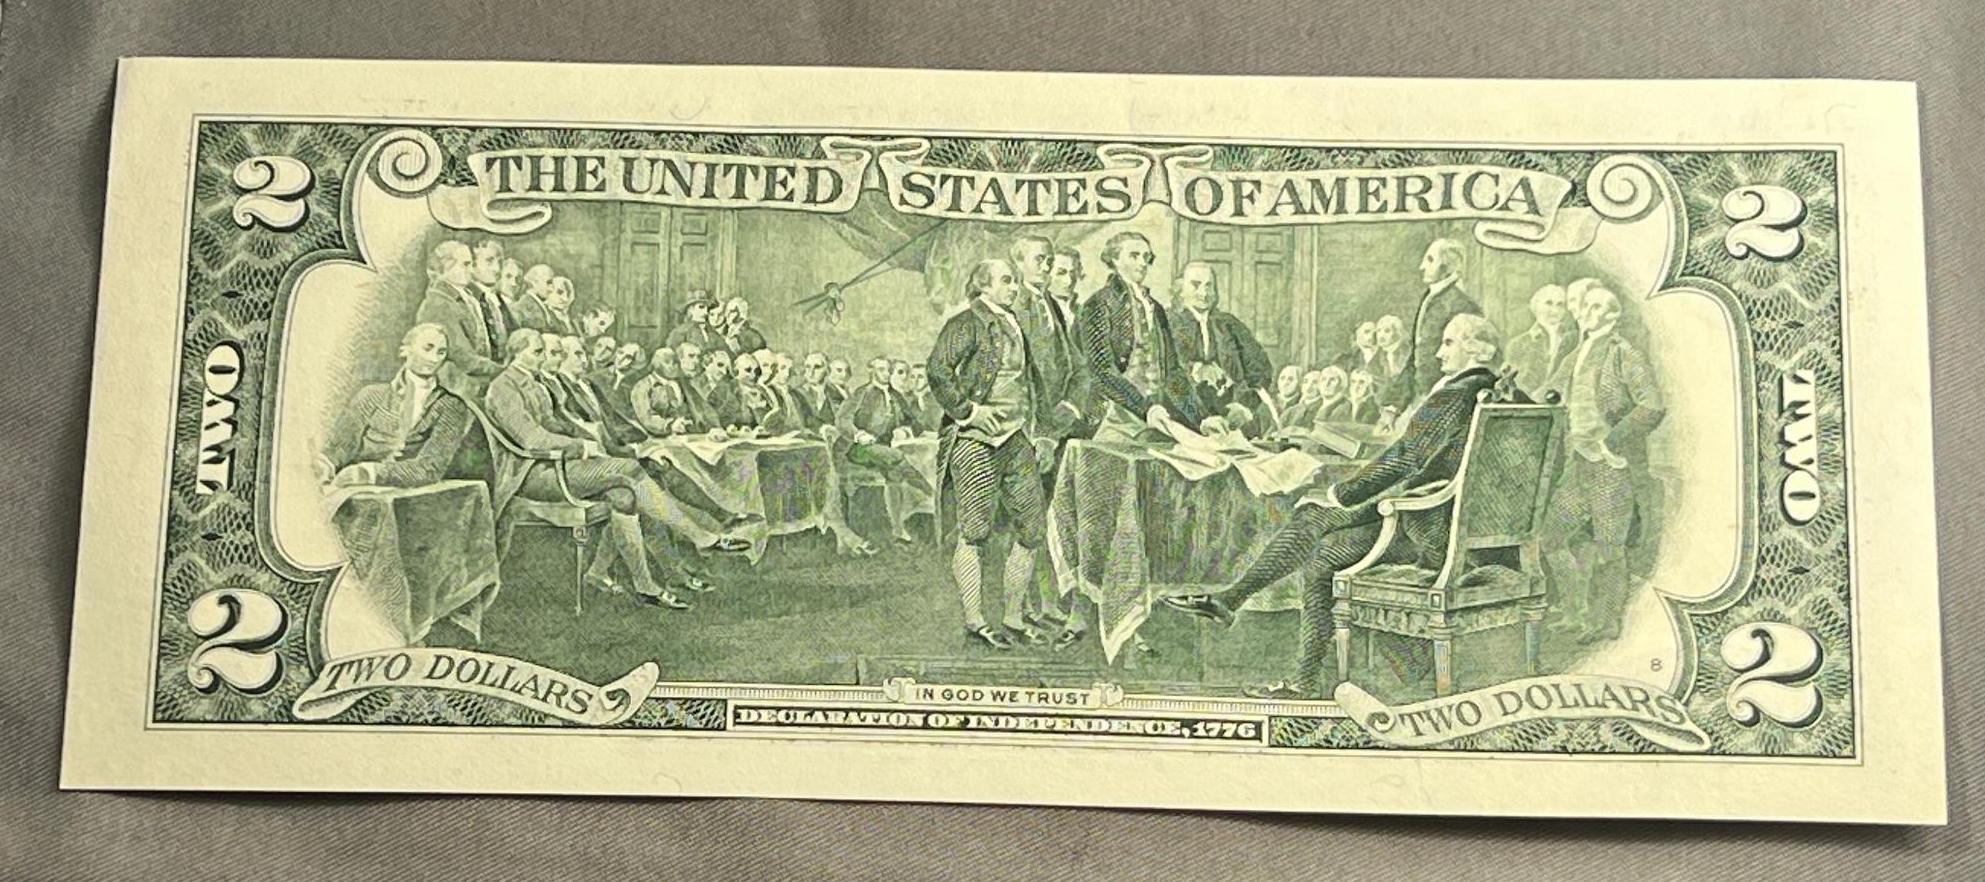 2003 UNC $2.00 Federal Reserve note w/ 9/11 foil graphics